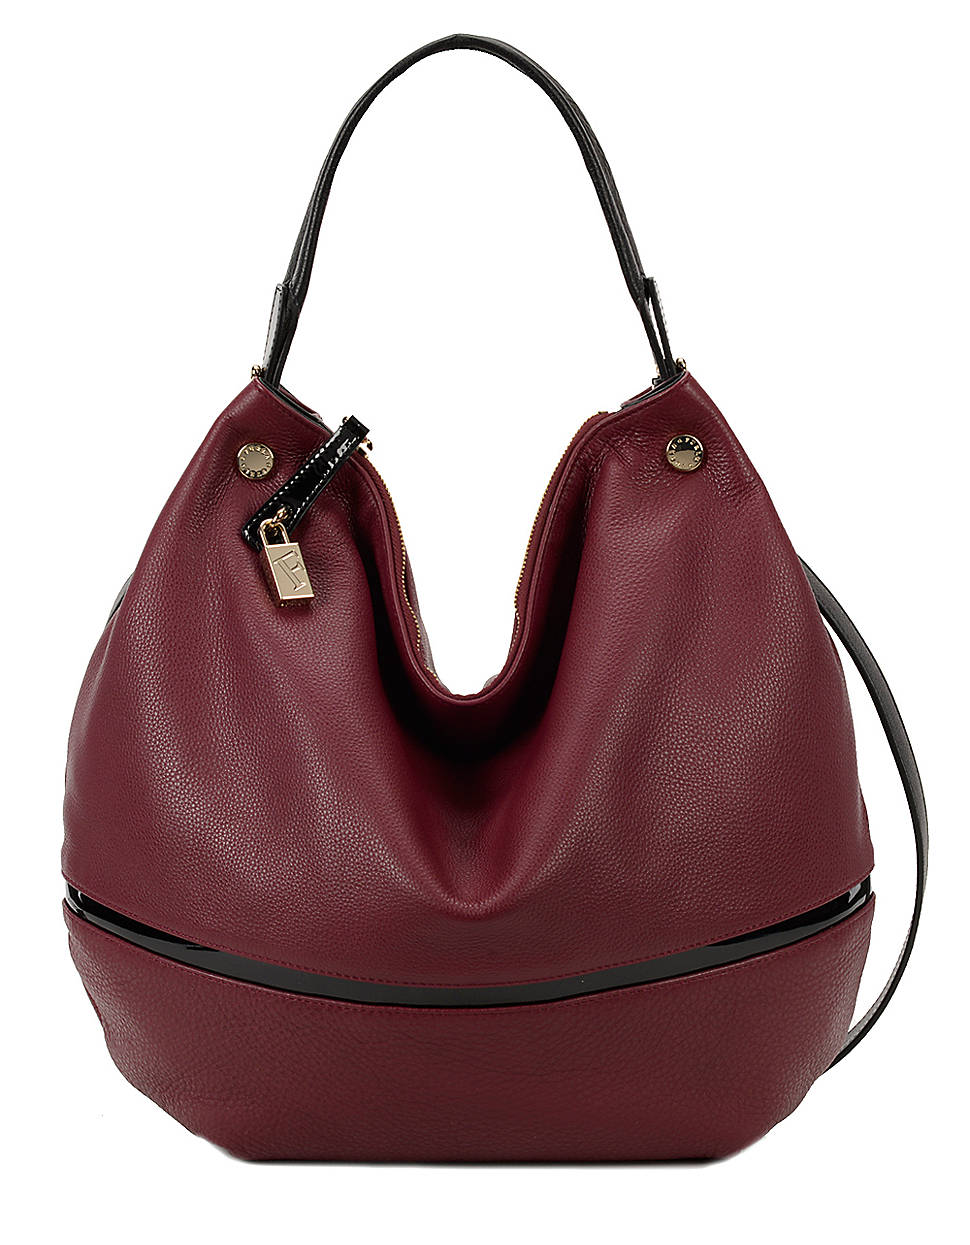 Furla Montmartre Cervo Patent Leather Hobo Bag in Red | Lyst